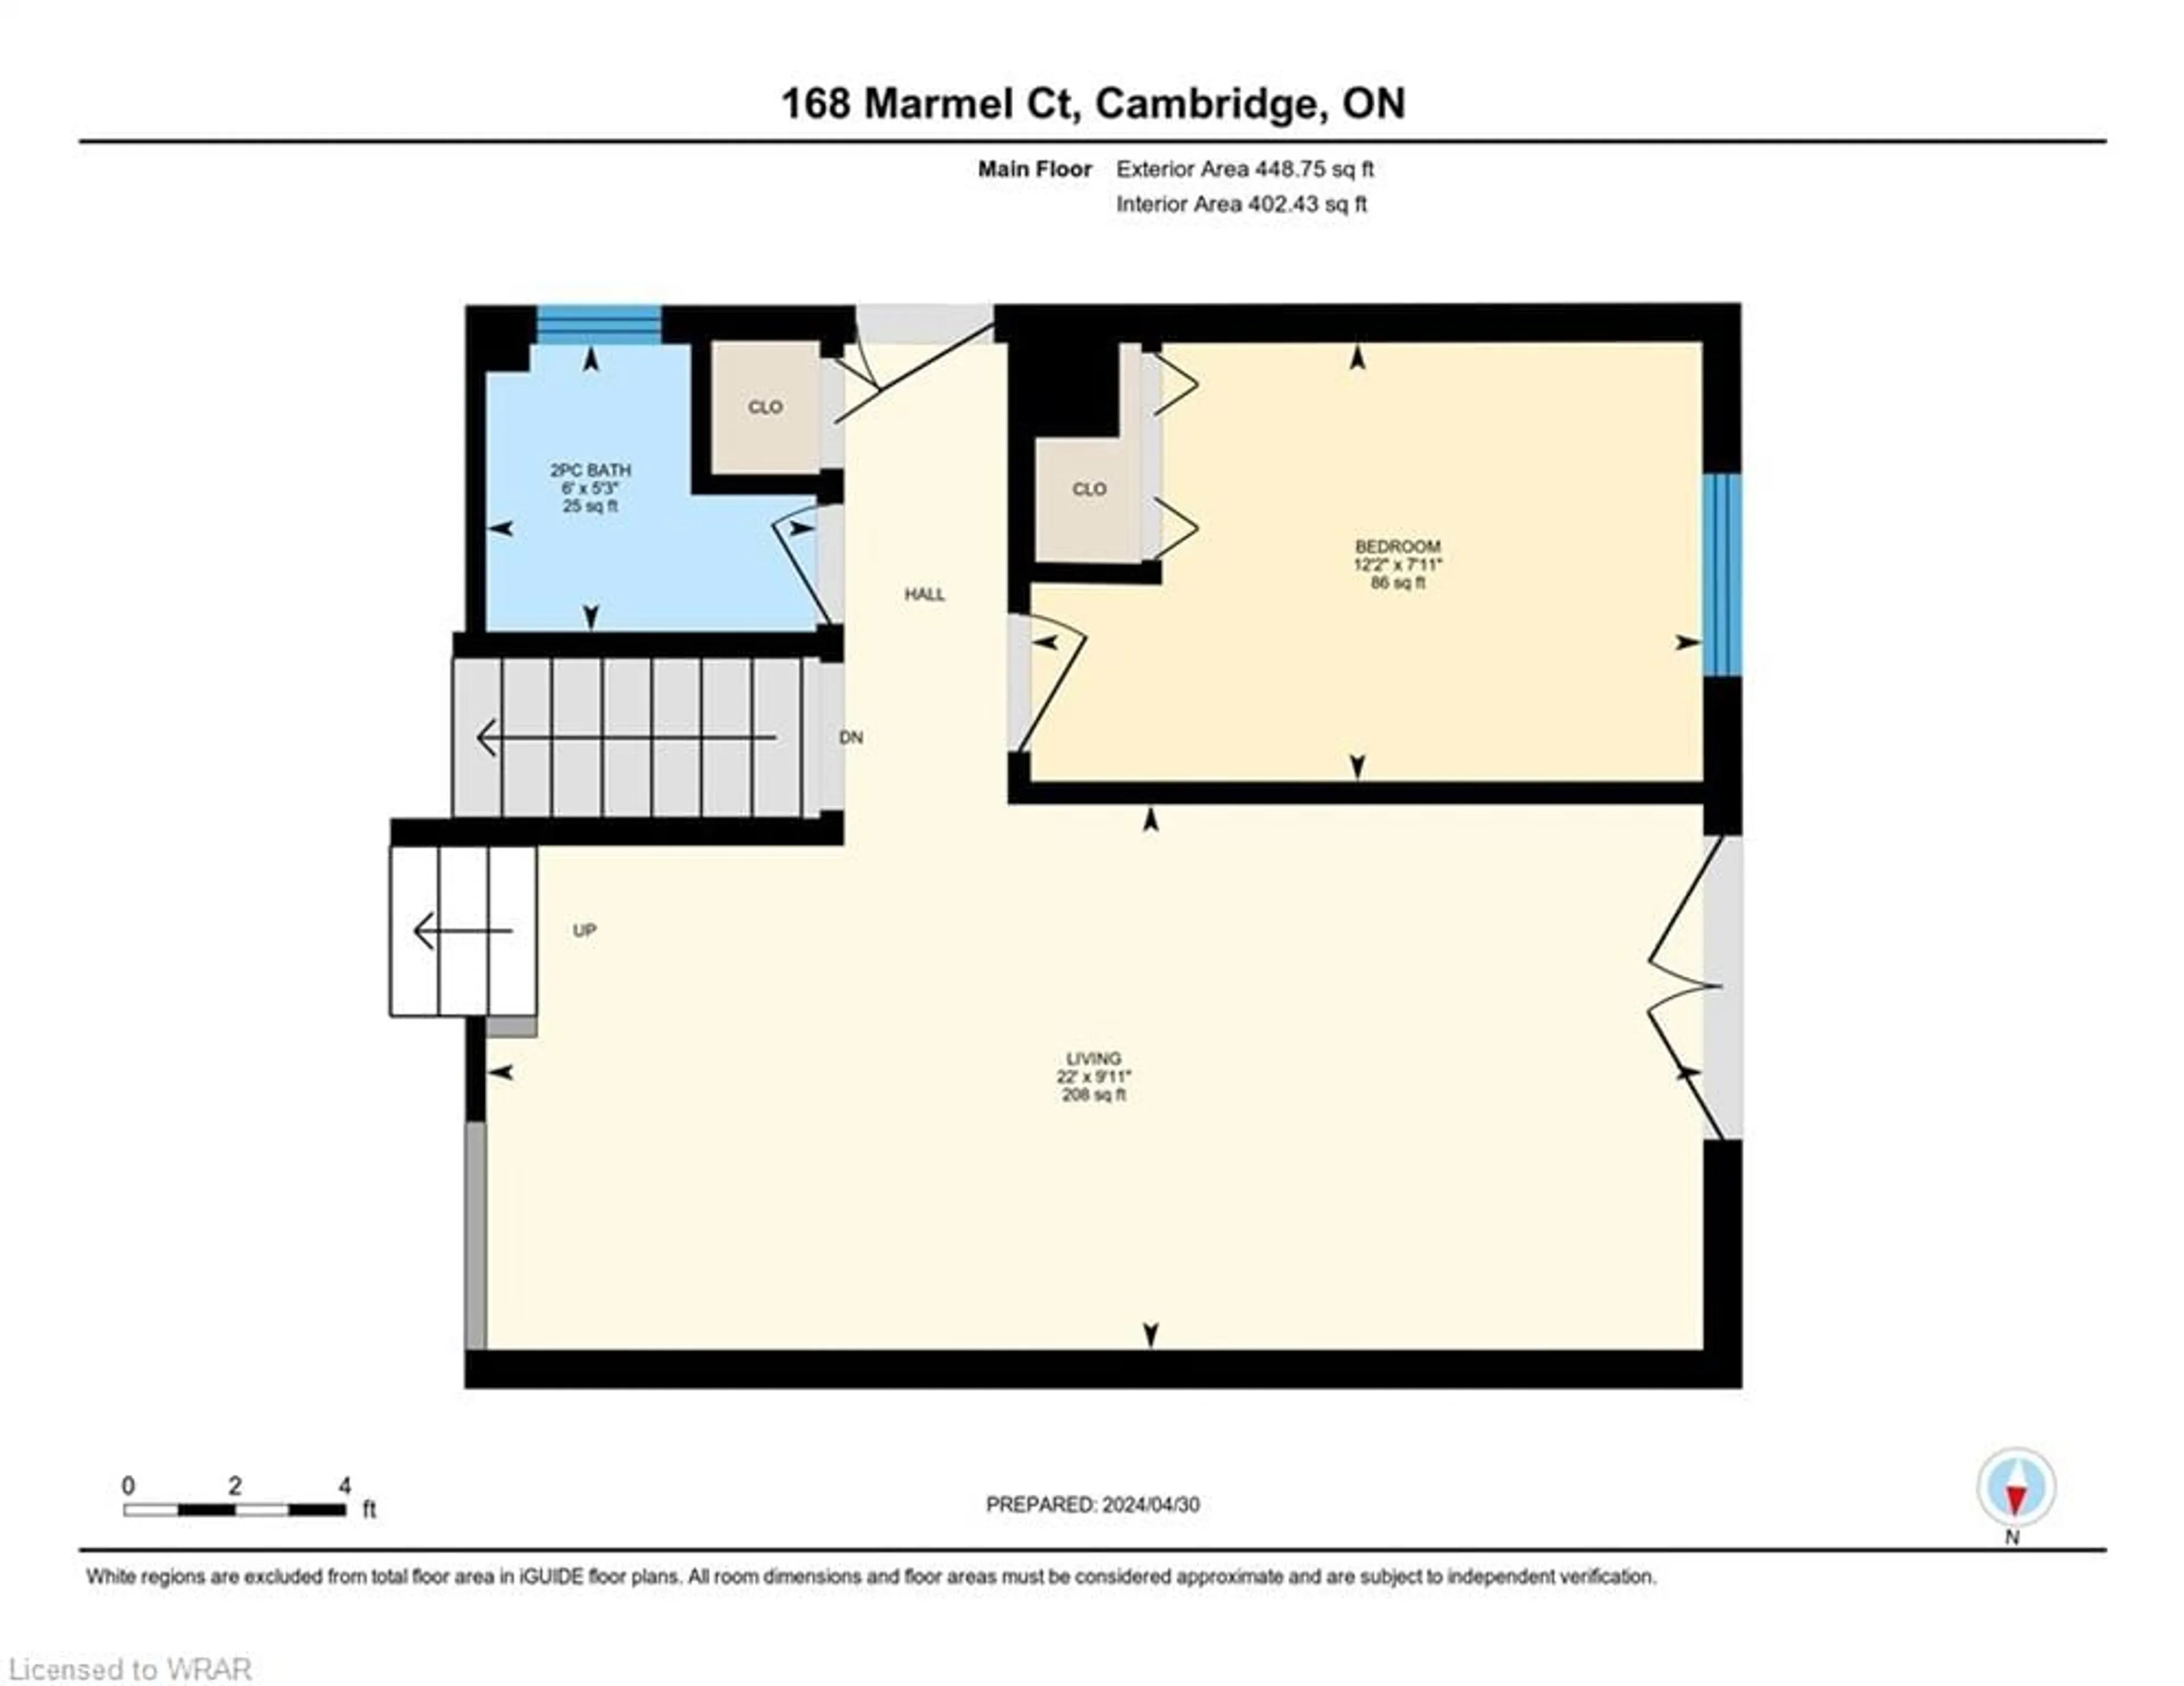 Floor plan for 168 Marmel Crt, Cambridge Ontario N3H 5J3